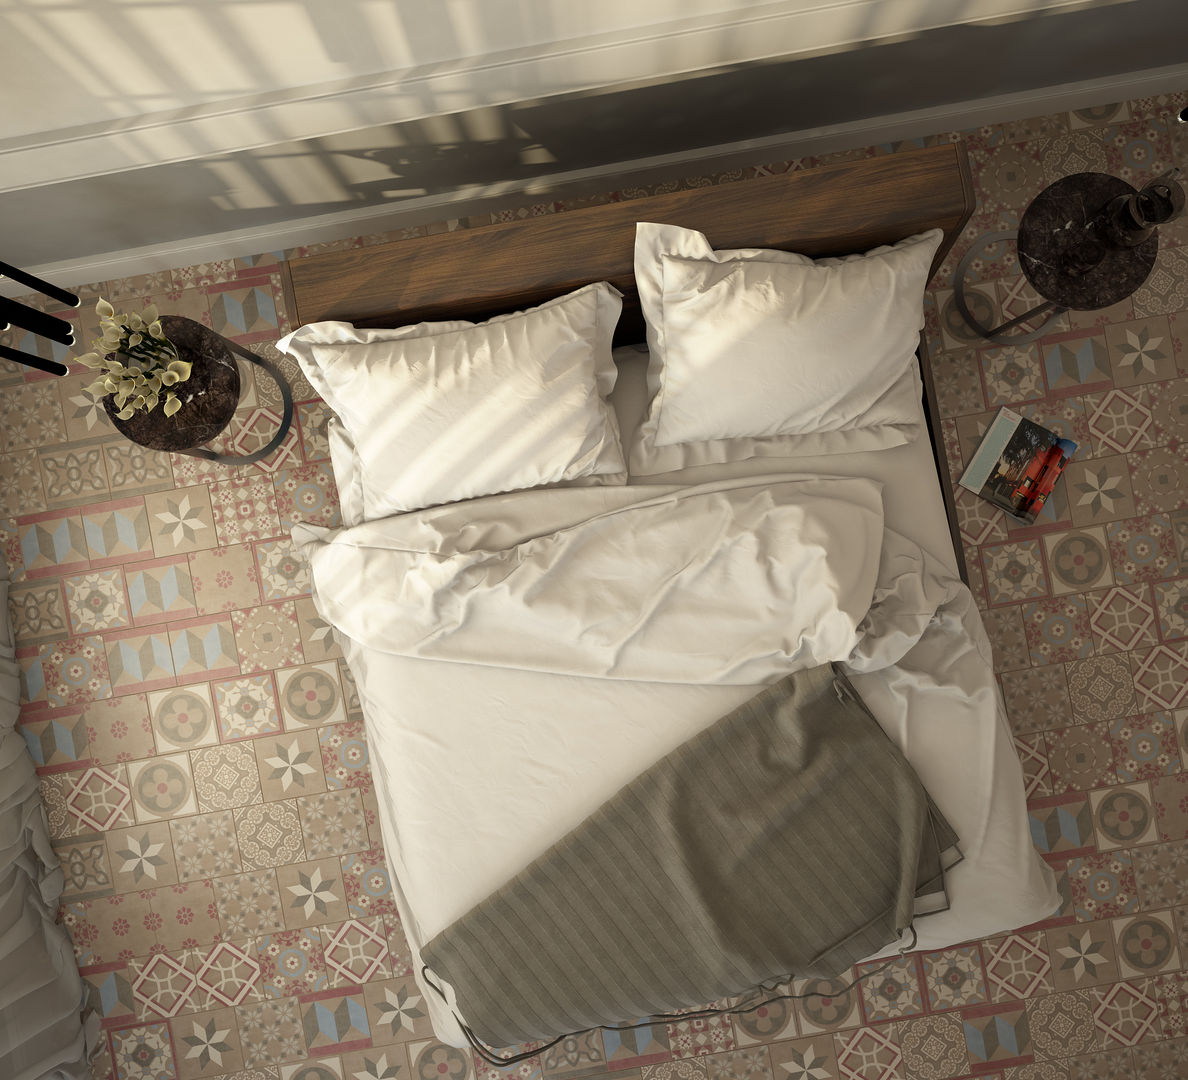 Catalogo Pirrera Cement, olivia Sciuto olivia Sciuto Modern Bedroom